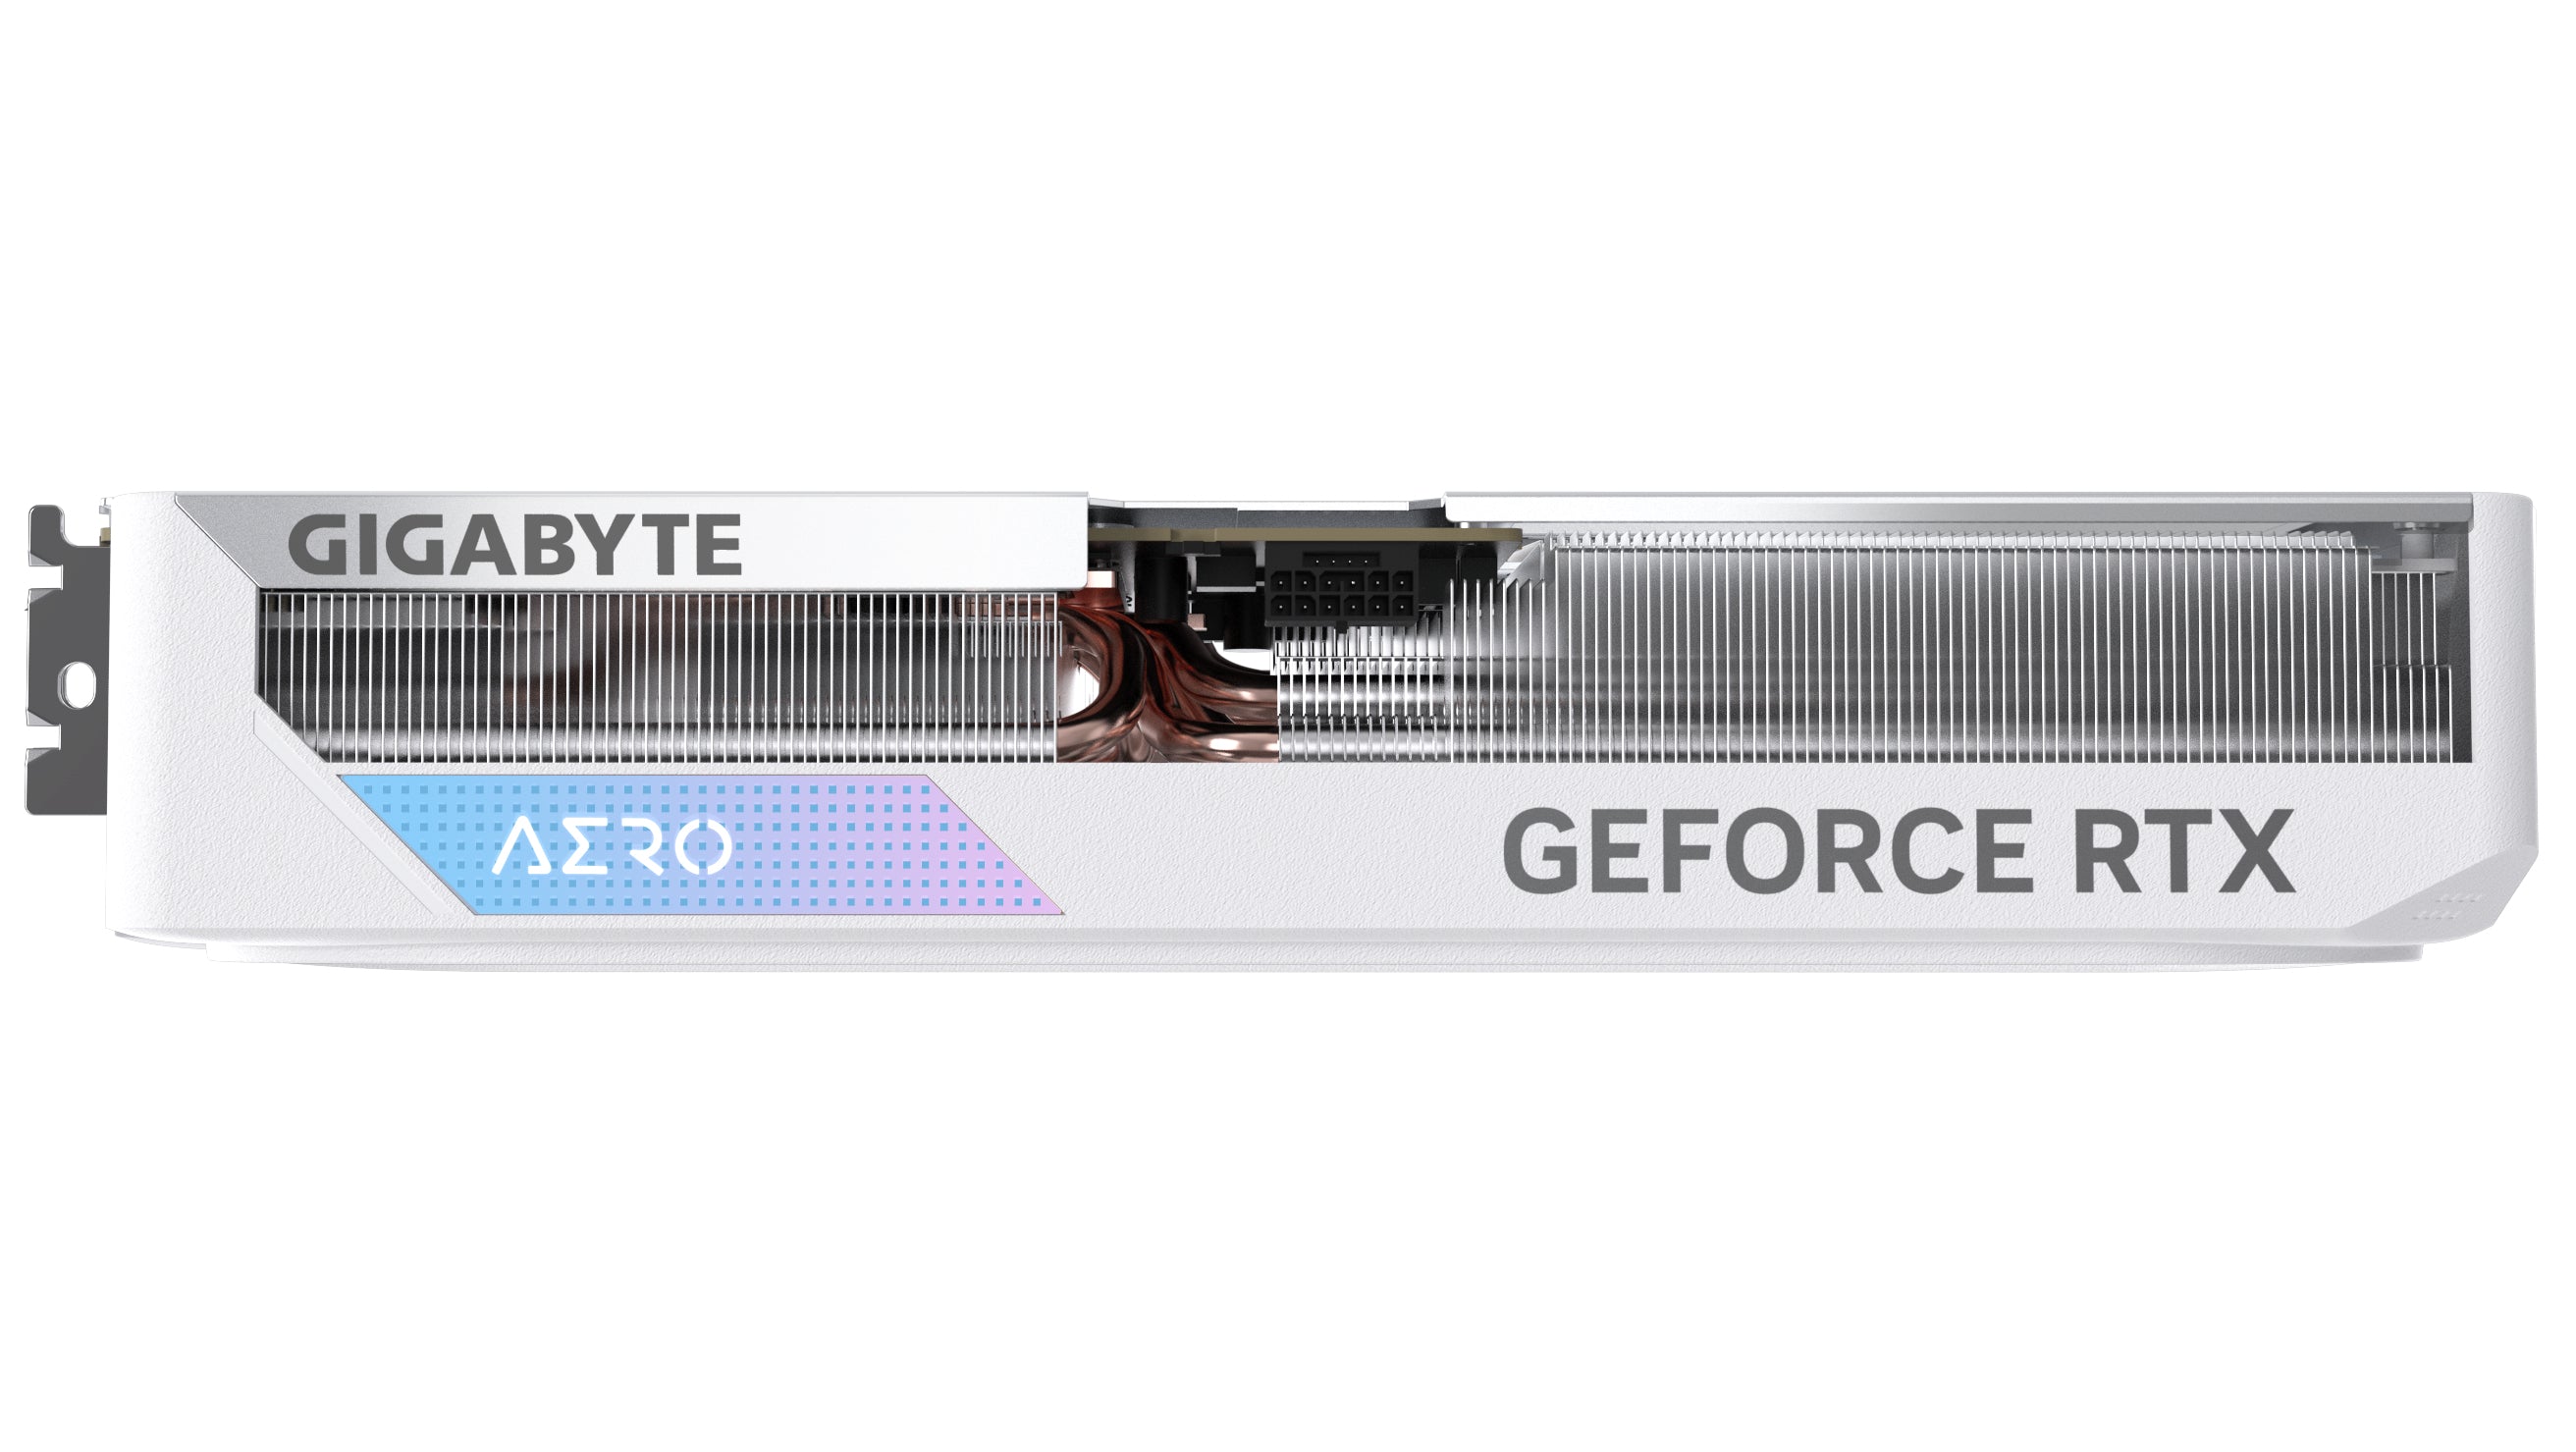 Gigabyte GeForce RTX 4070 Ti SUPER AERO OC 16G 16GB